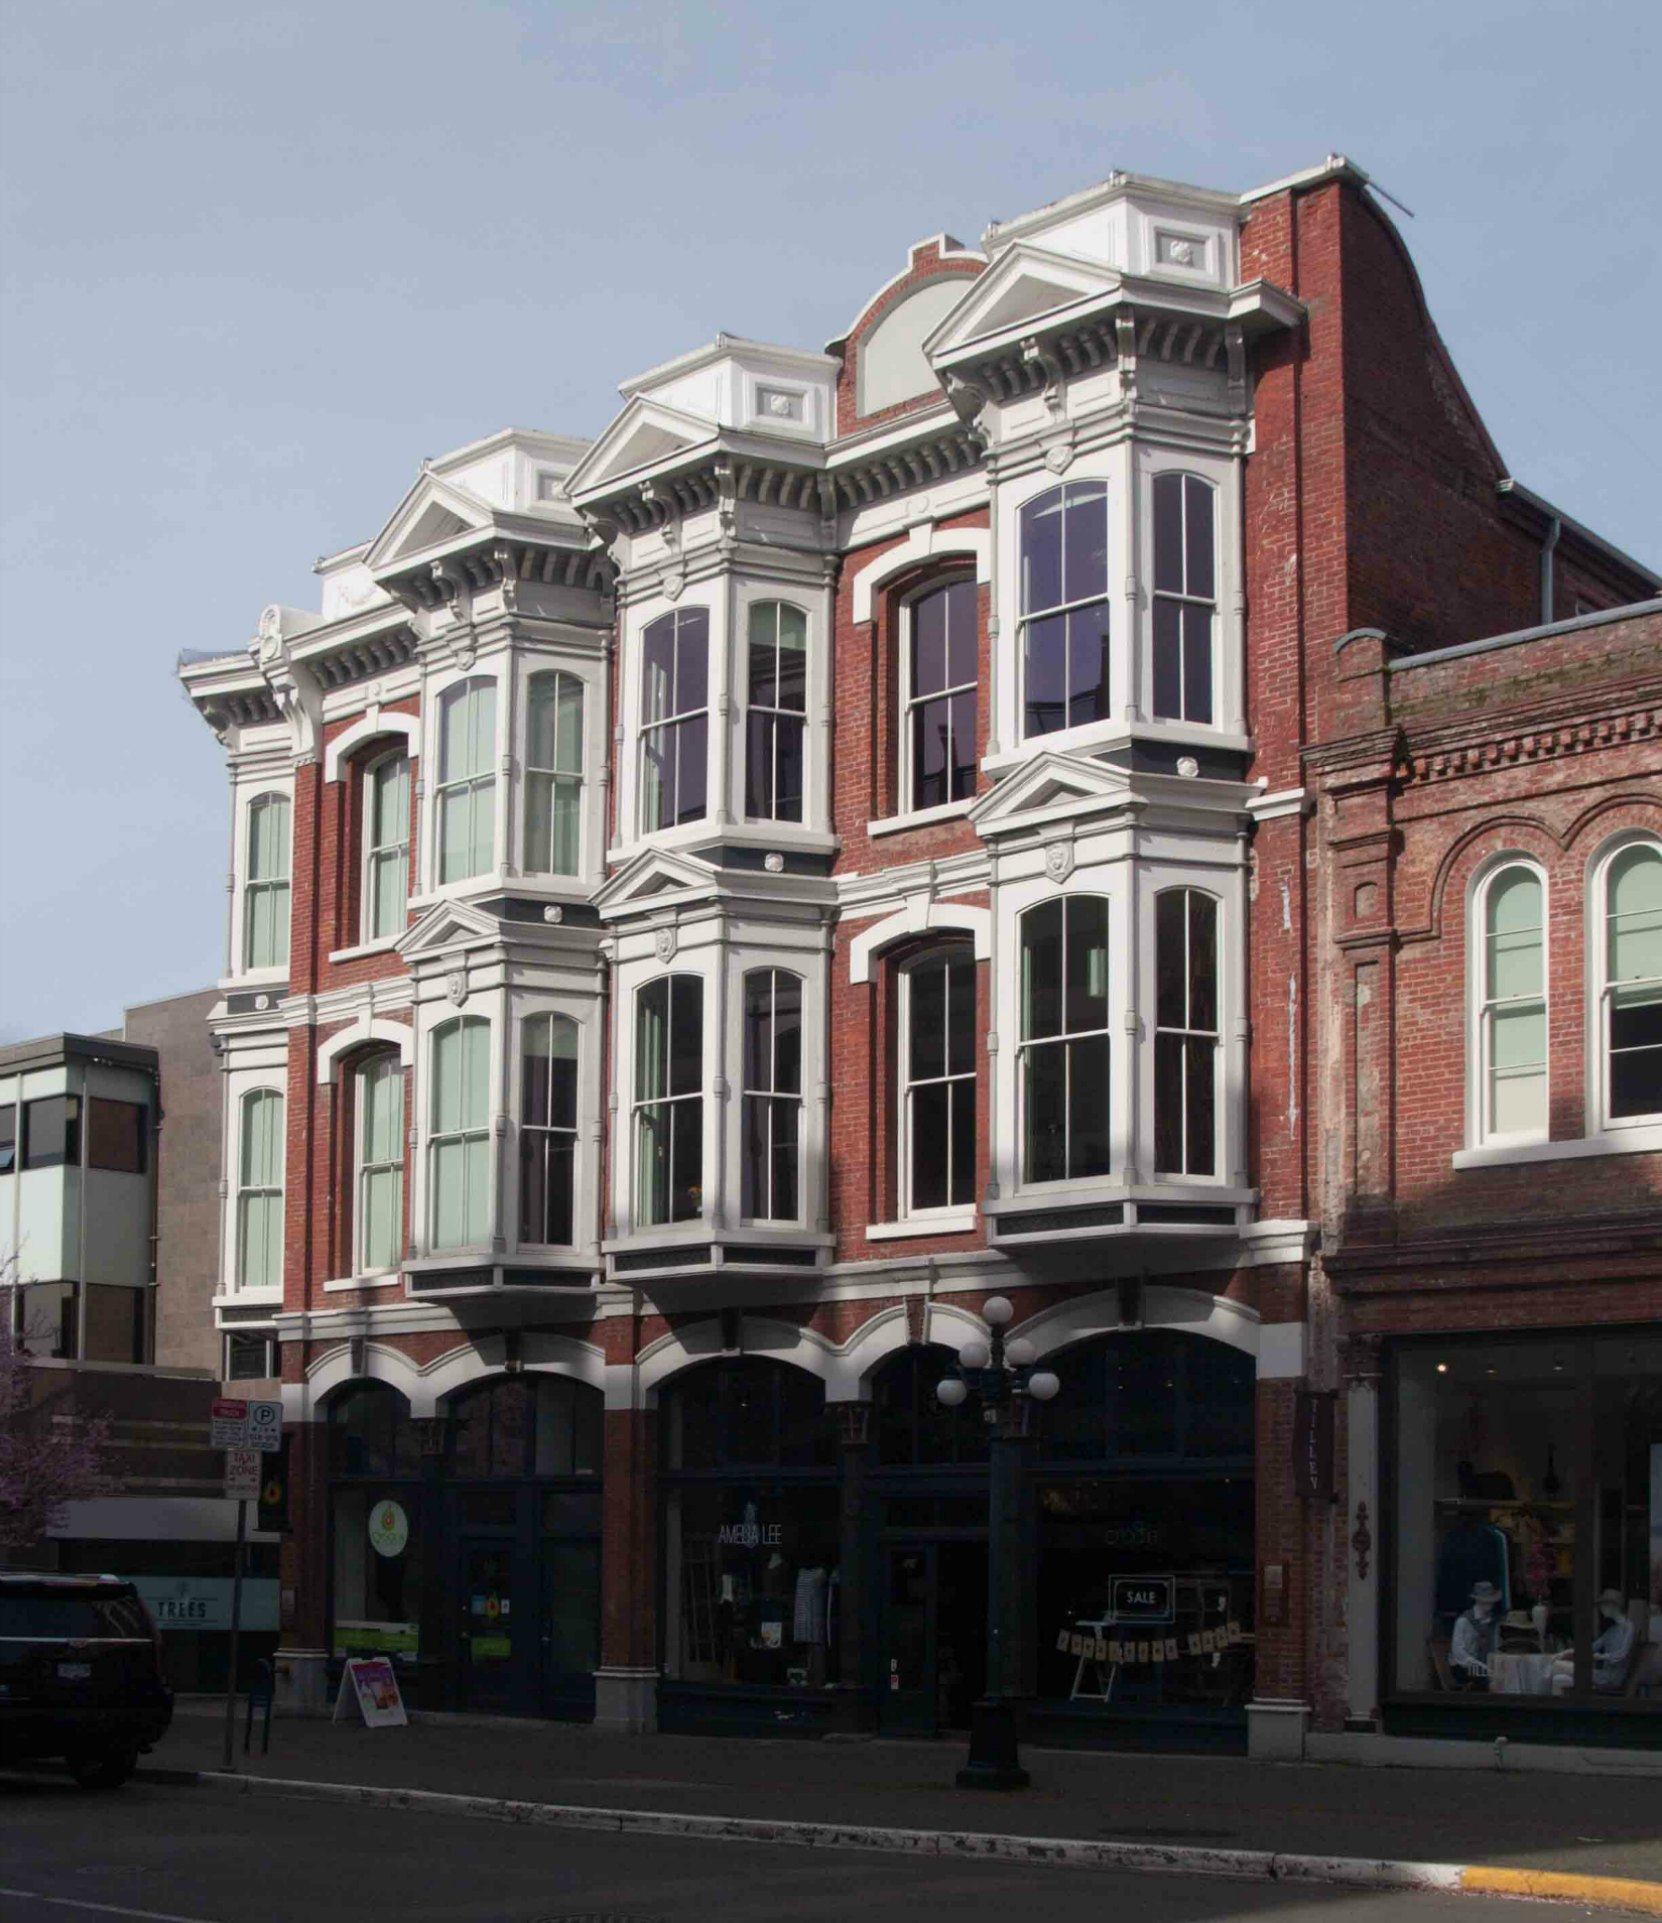 550-554 Yates Street, originally built in 1883 as the Oriental Hotel